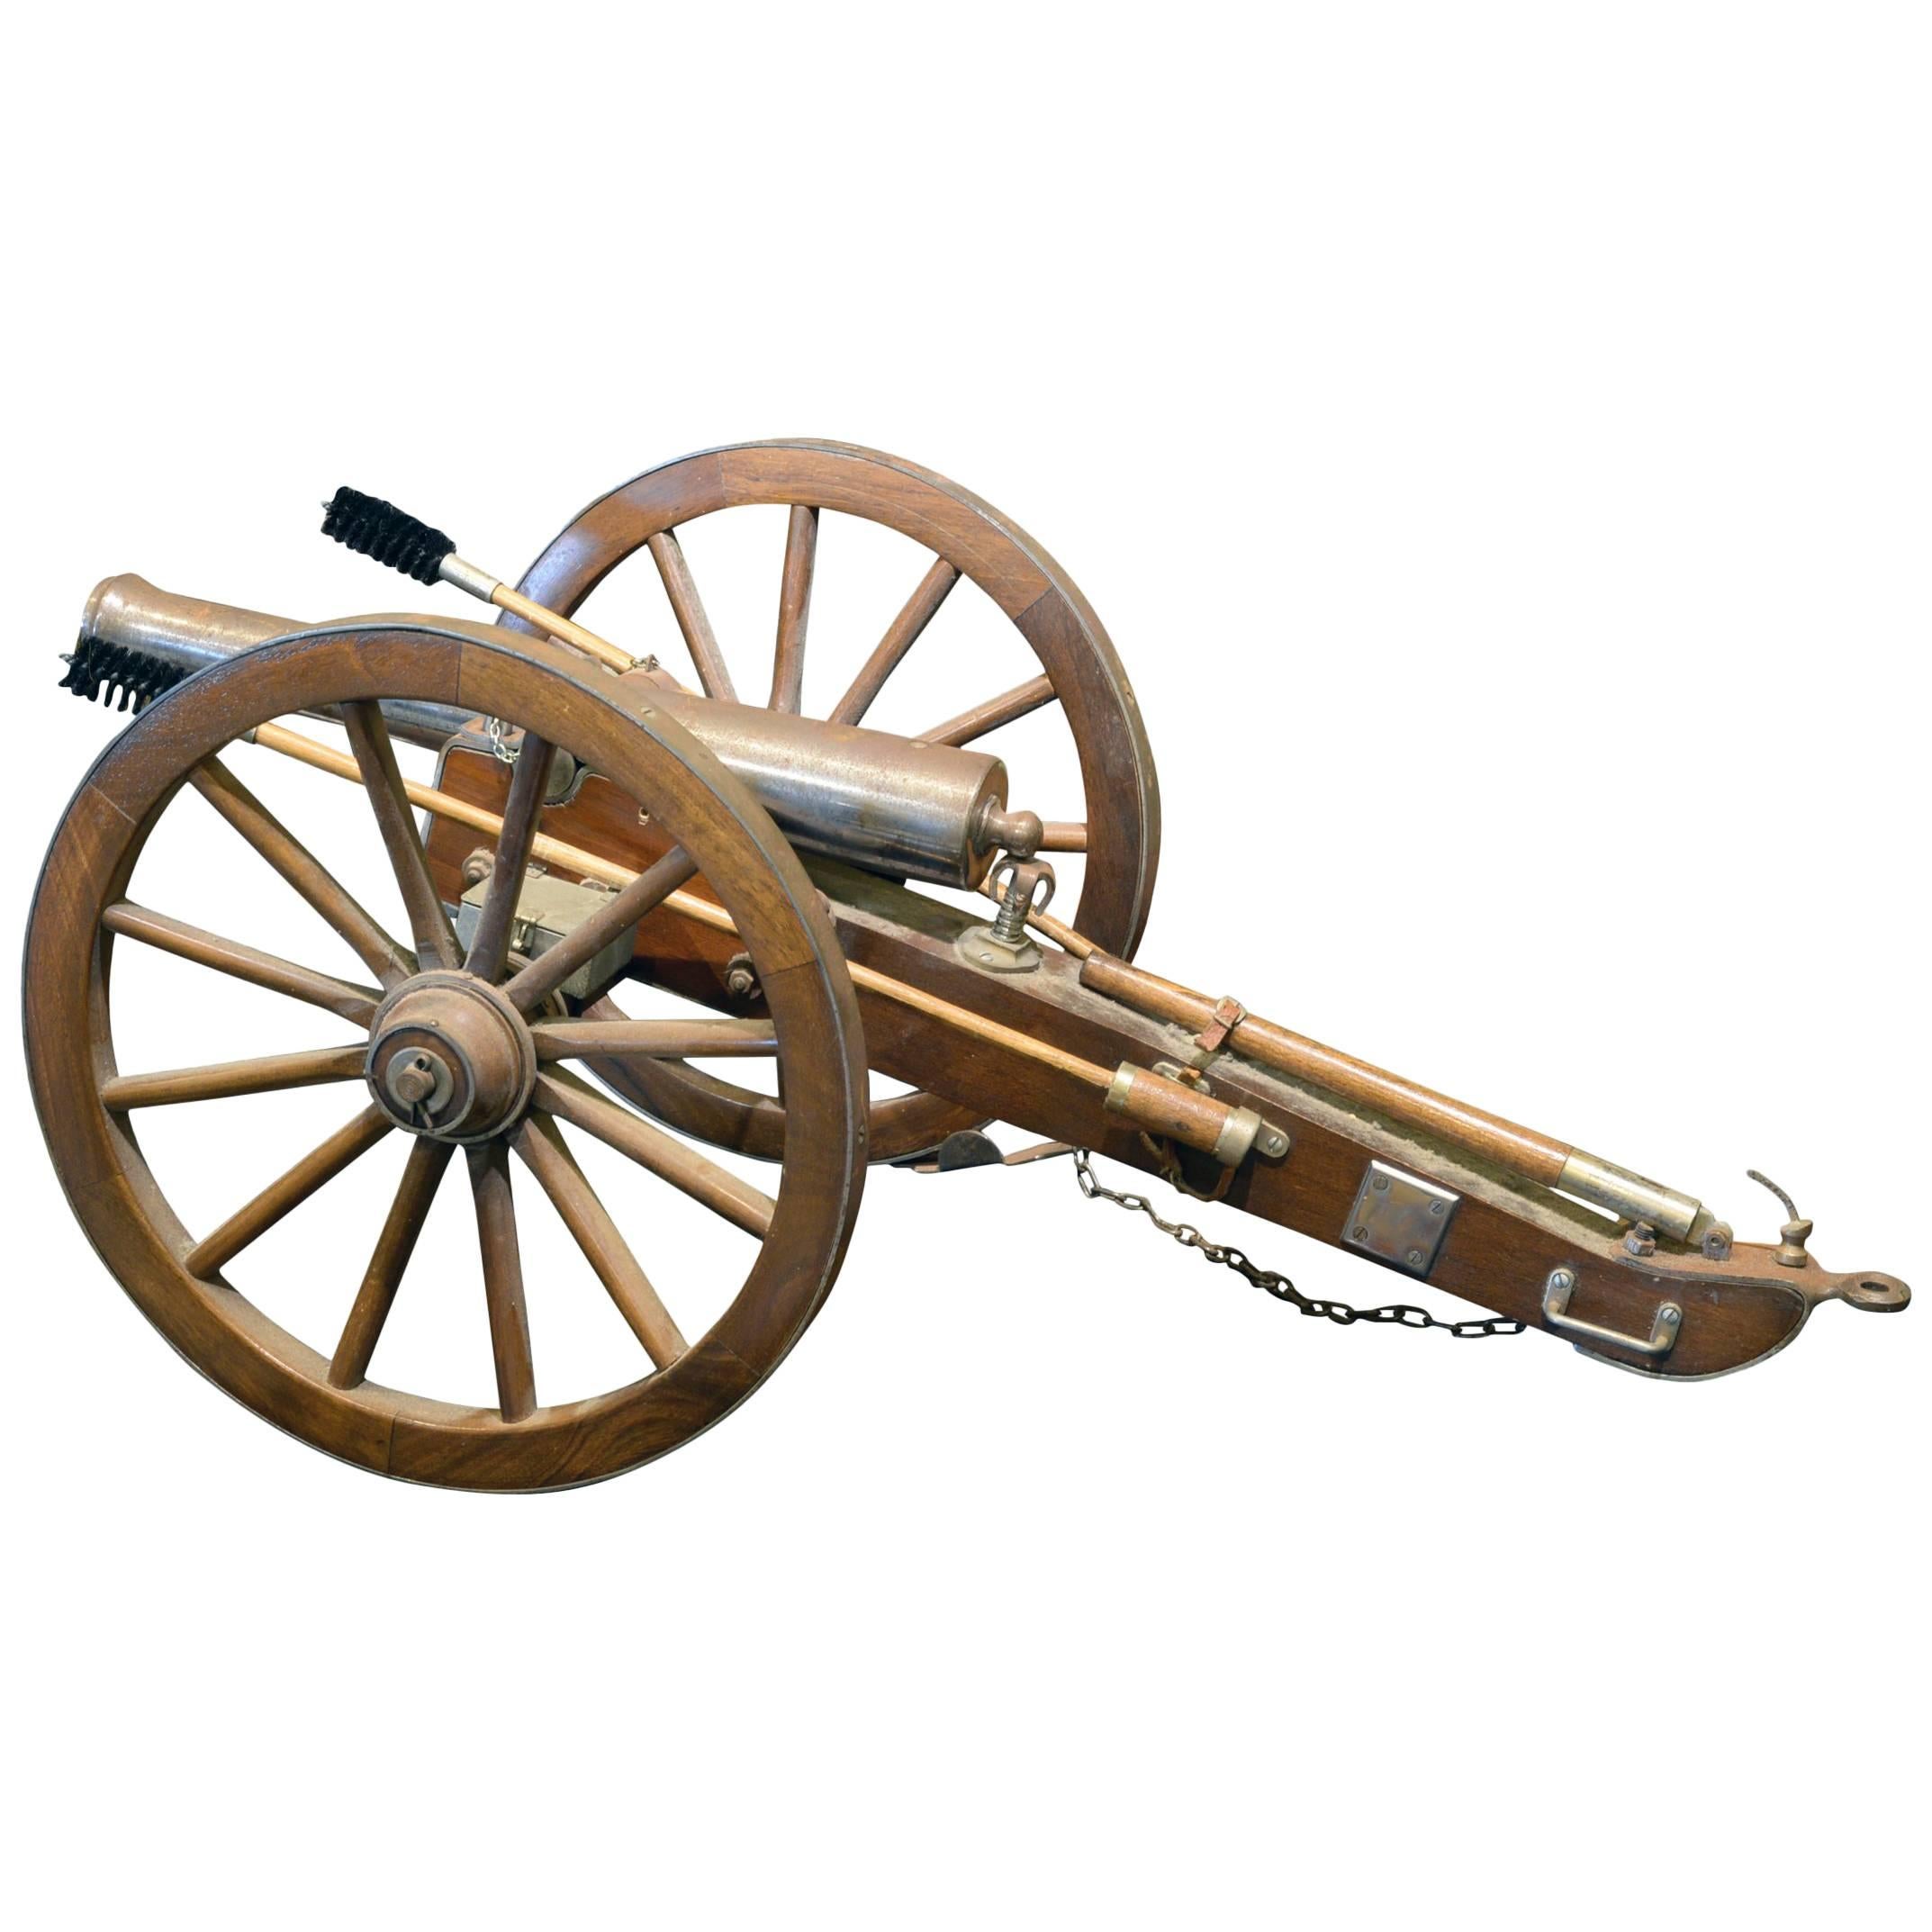 Scale Model of 19th Century Field Gun For Sale